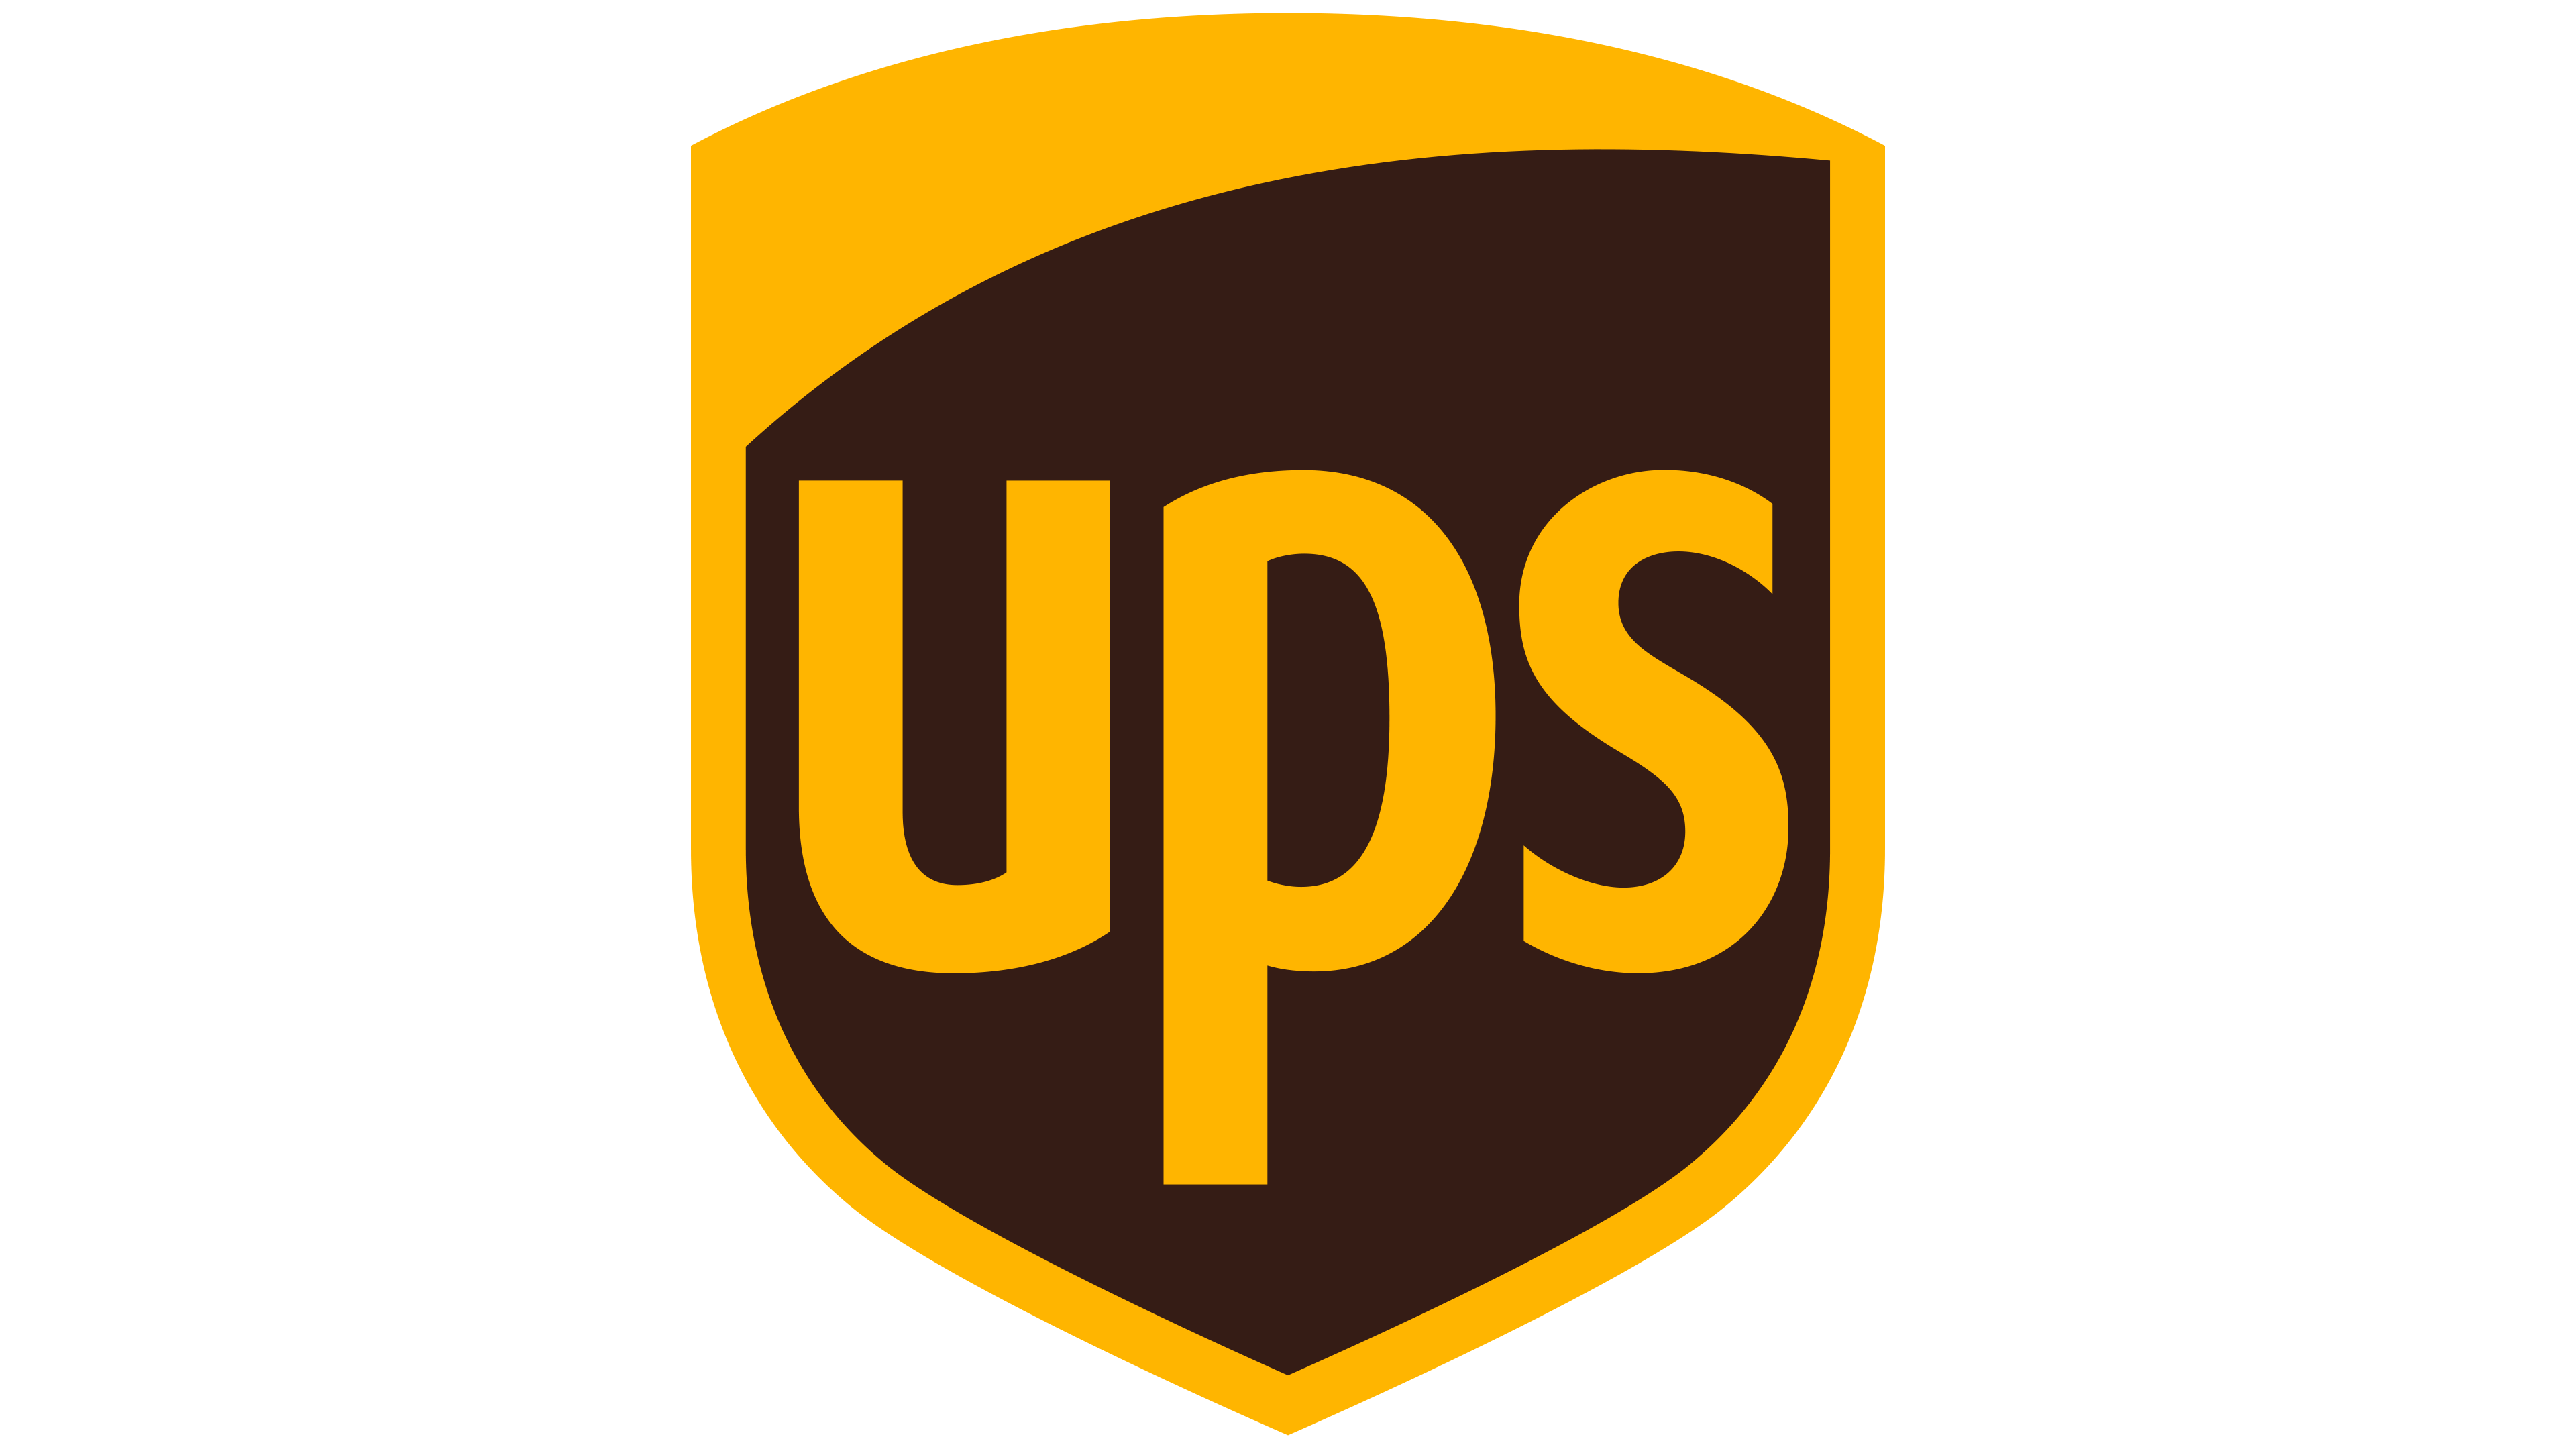 Contacter le service client UPS